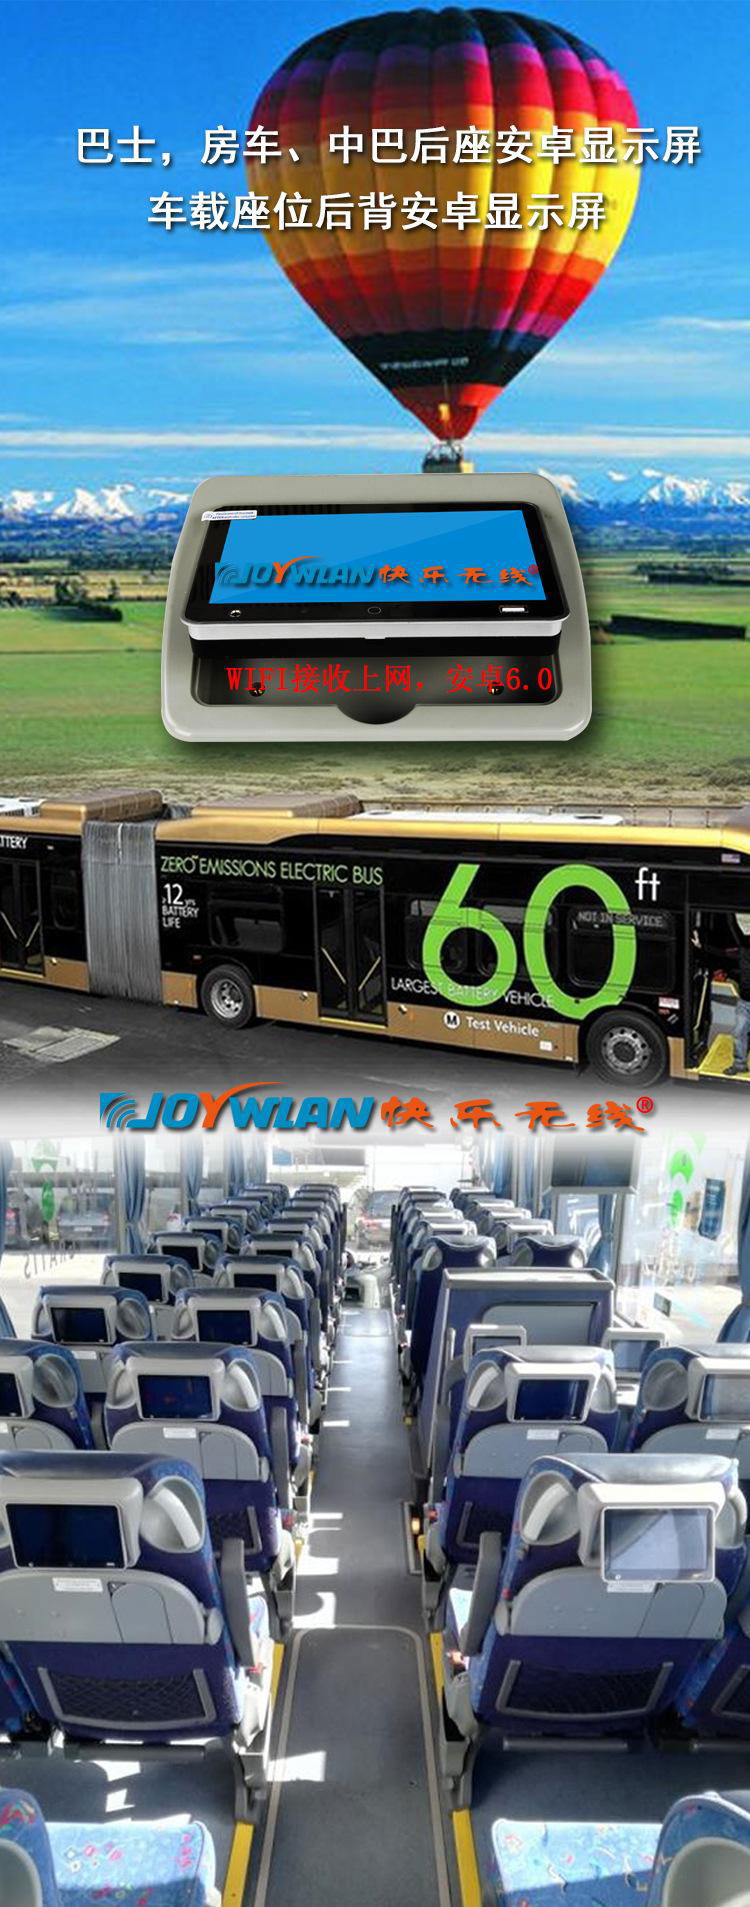 7" bus/car seat back/rear TV multimedia entertainment system 5